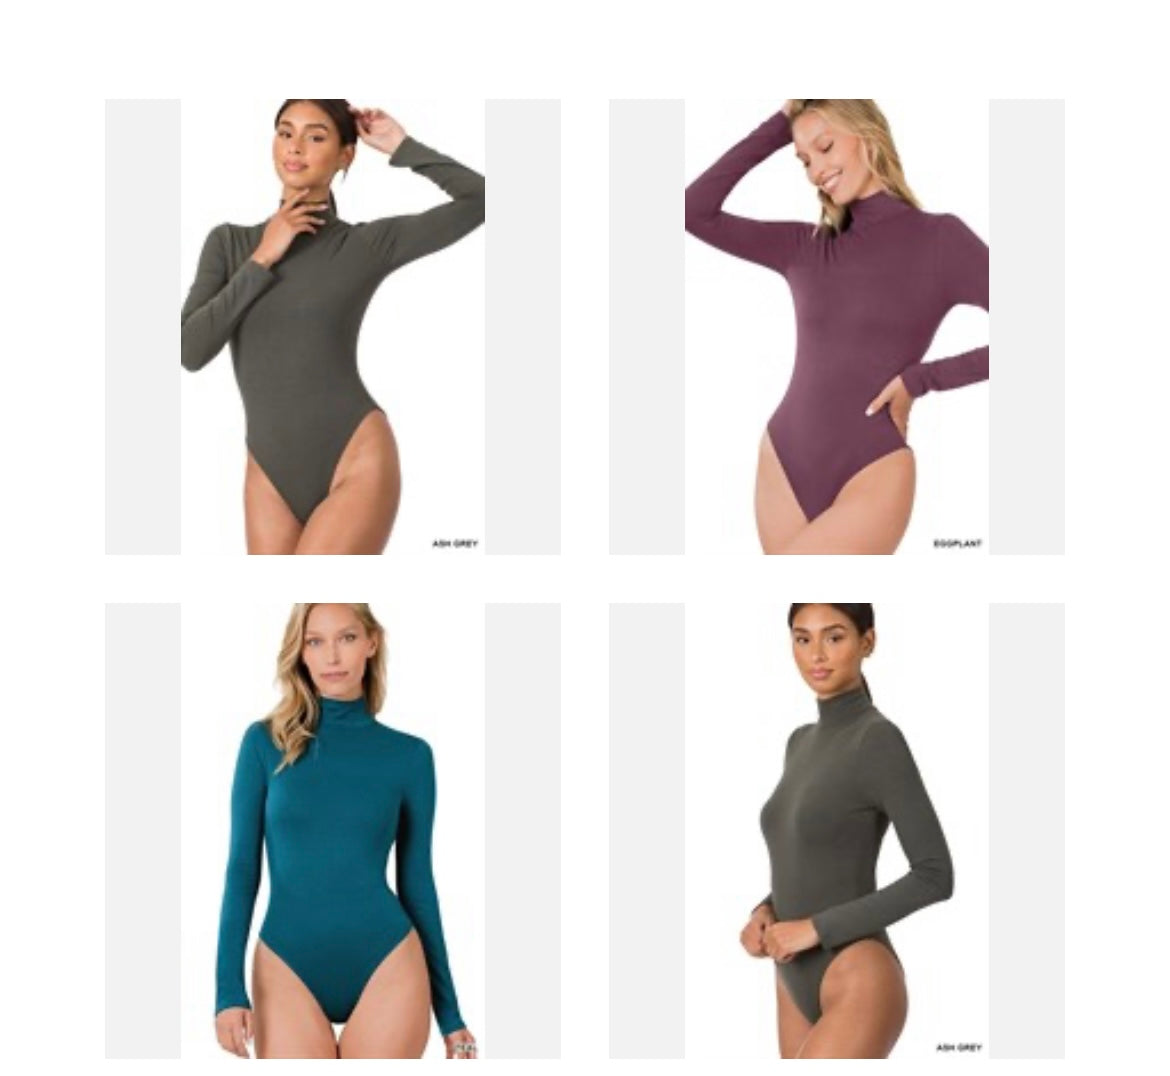 Bodysuits for Women Collared Neck Design Long Sleeve Winter Fall